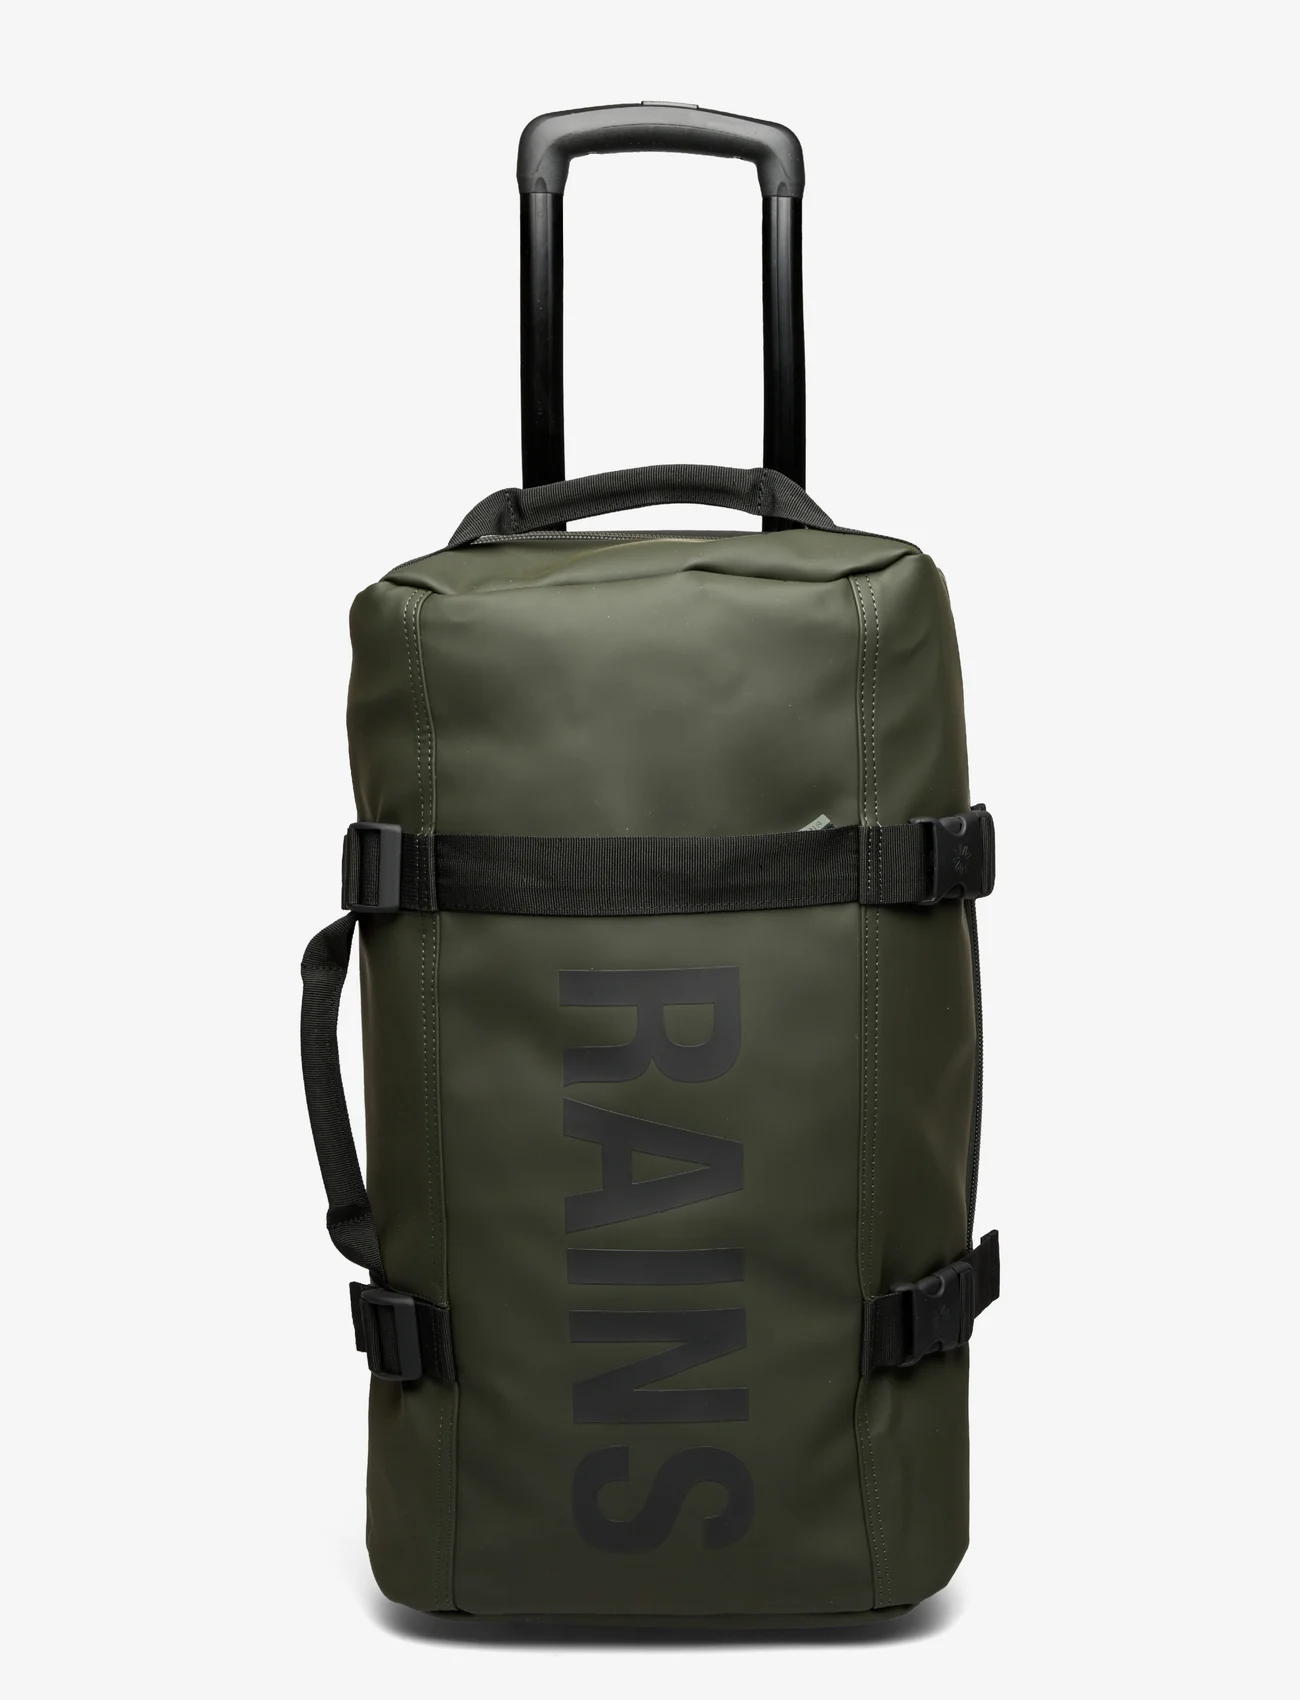 Rains - Texel Cabin Bag W3 - water proof bags - 03 green - 0